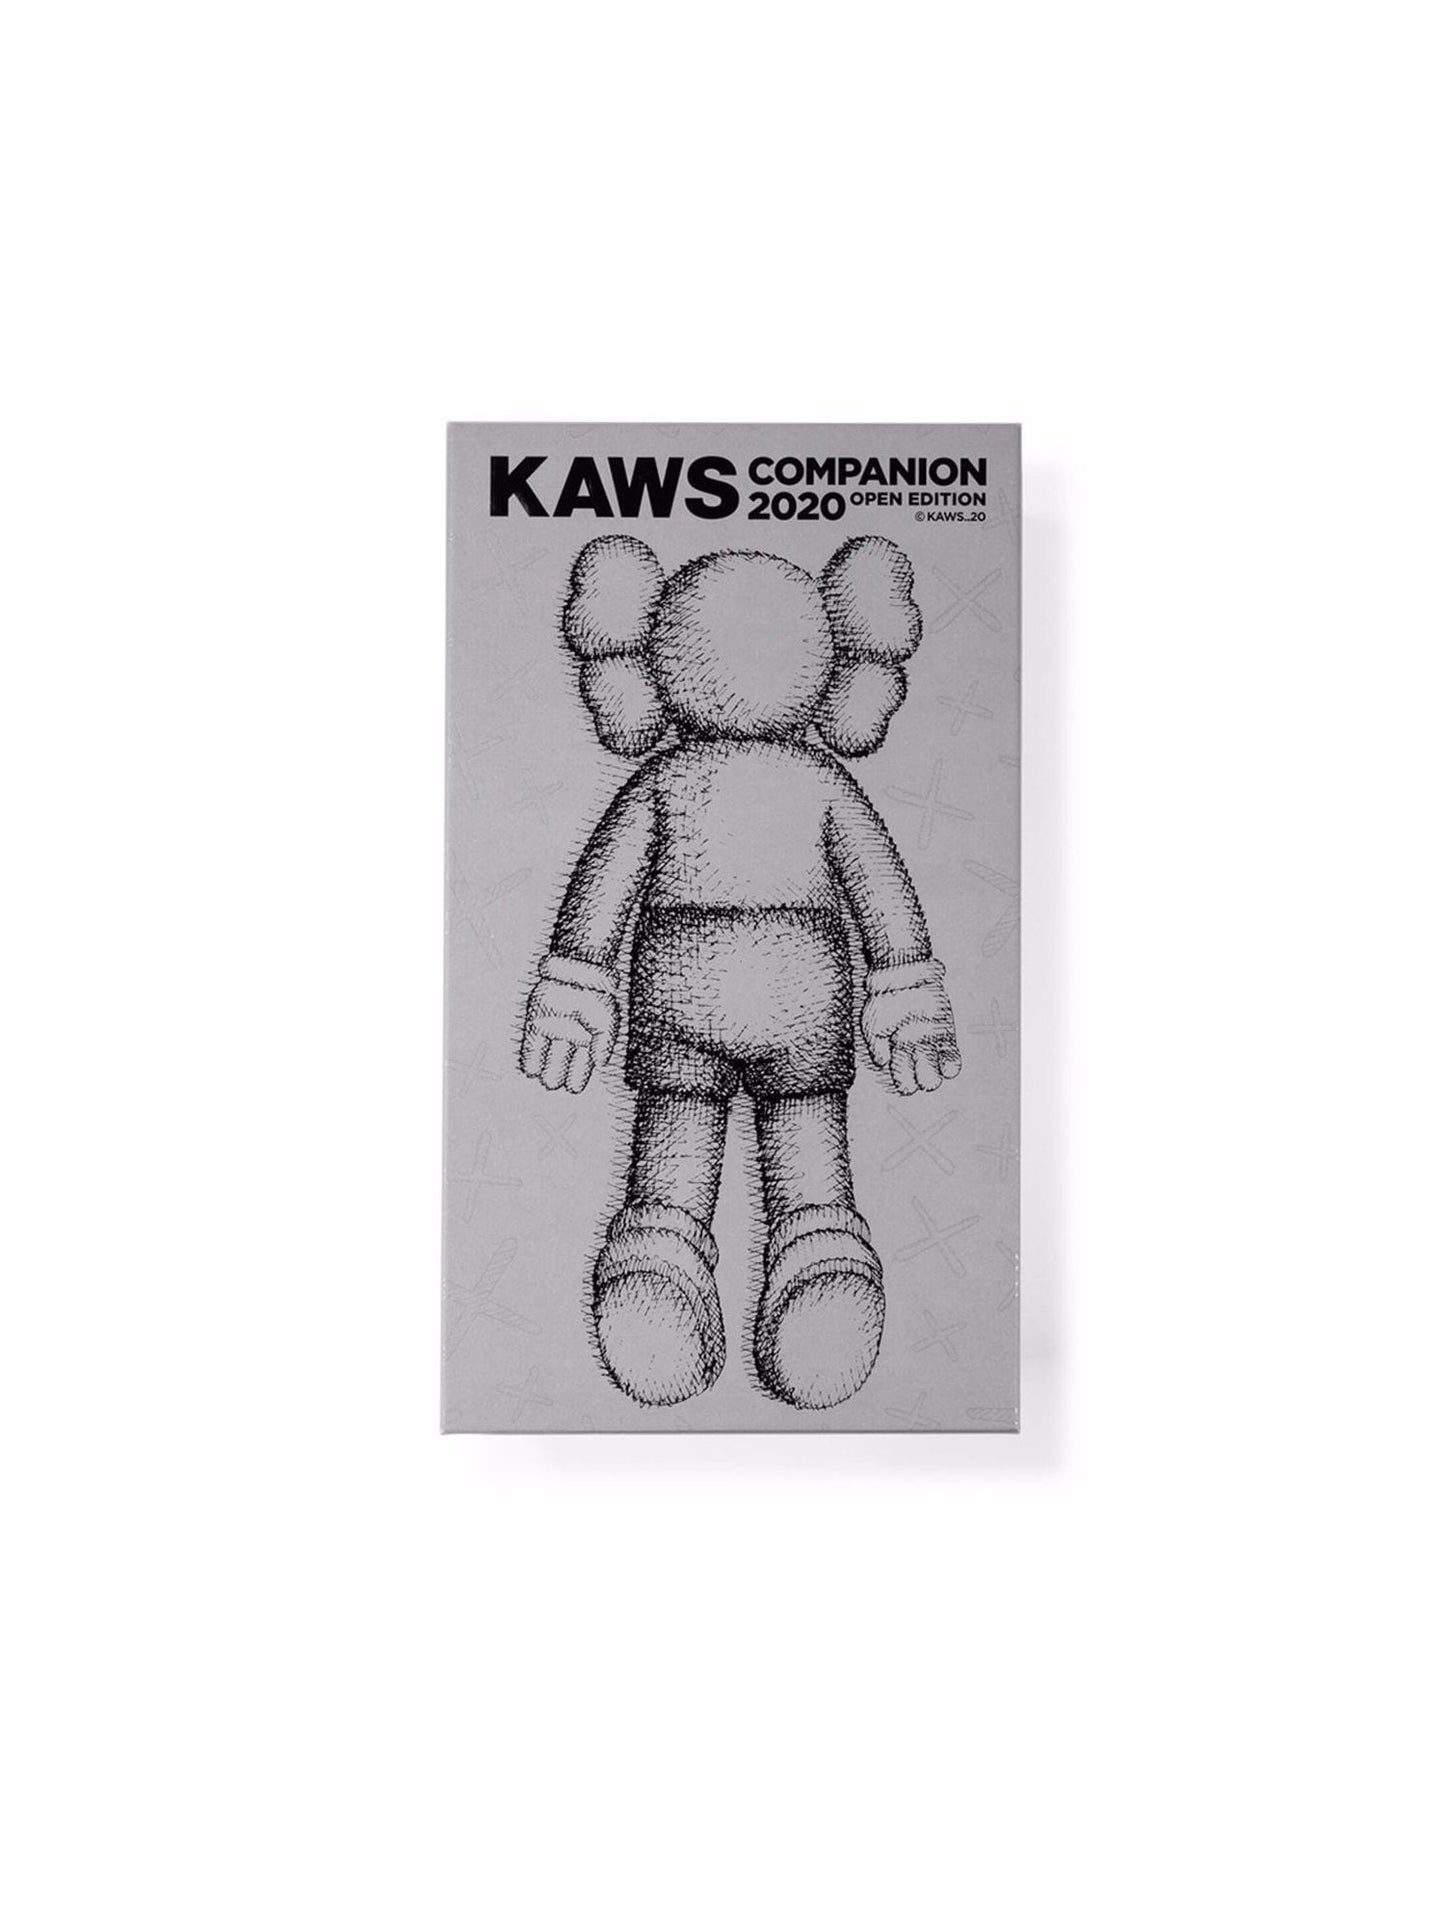 Figura del compañero de Kaws